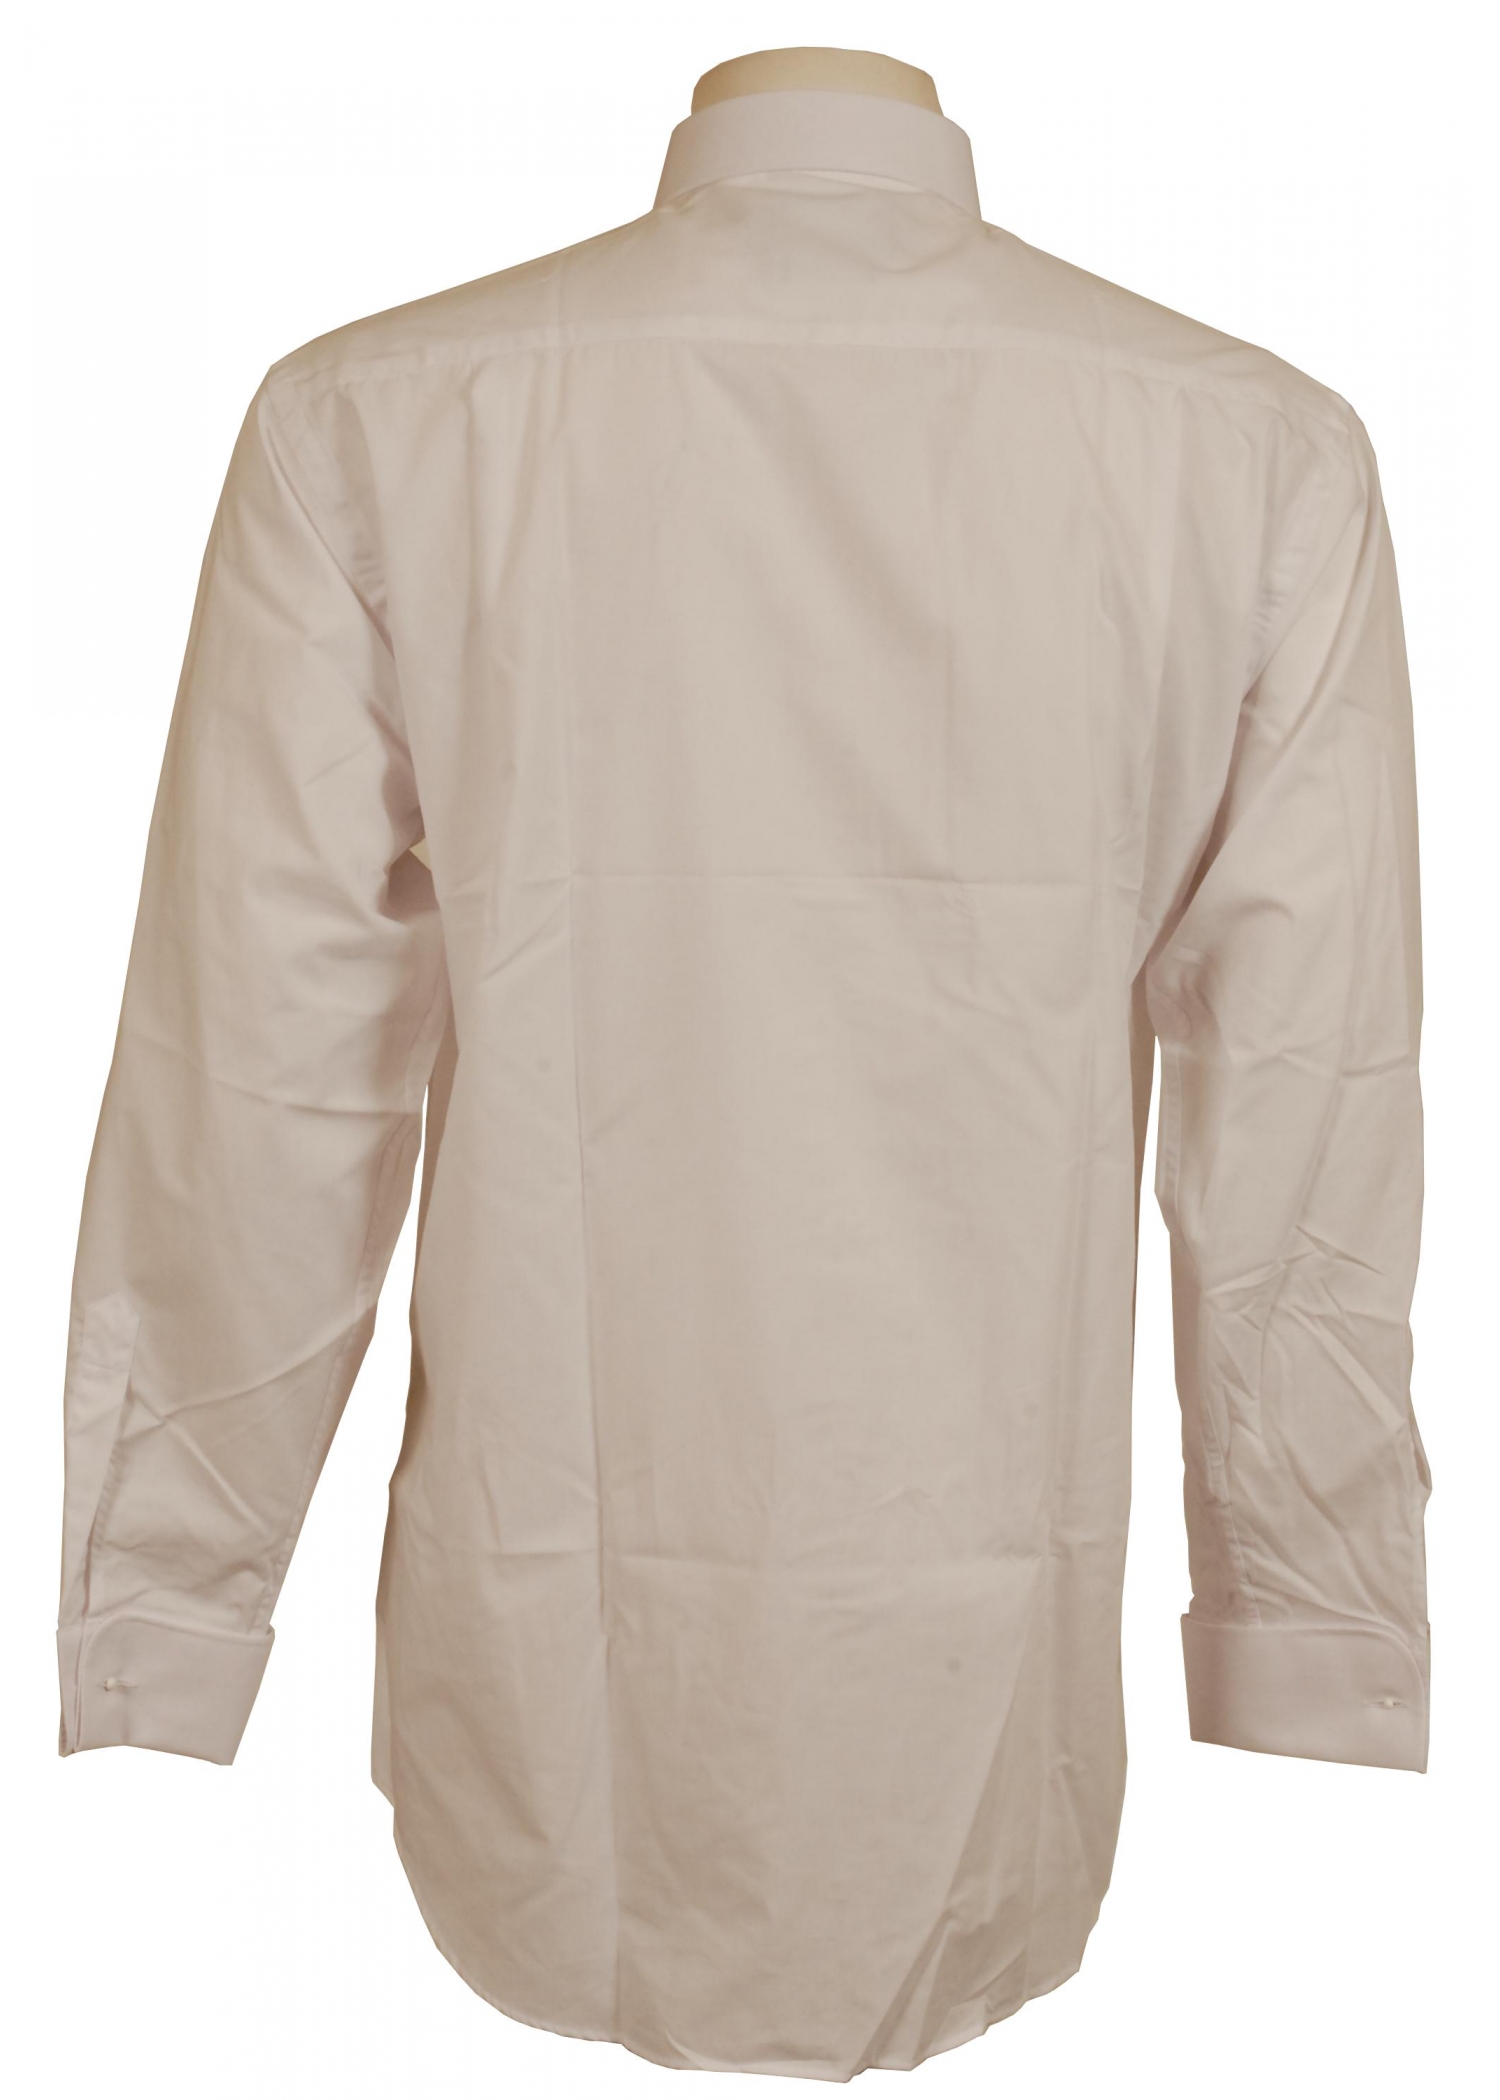 White Cut Away Shirt - Tom Murphy's Formal and Menswear